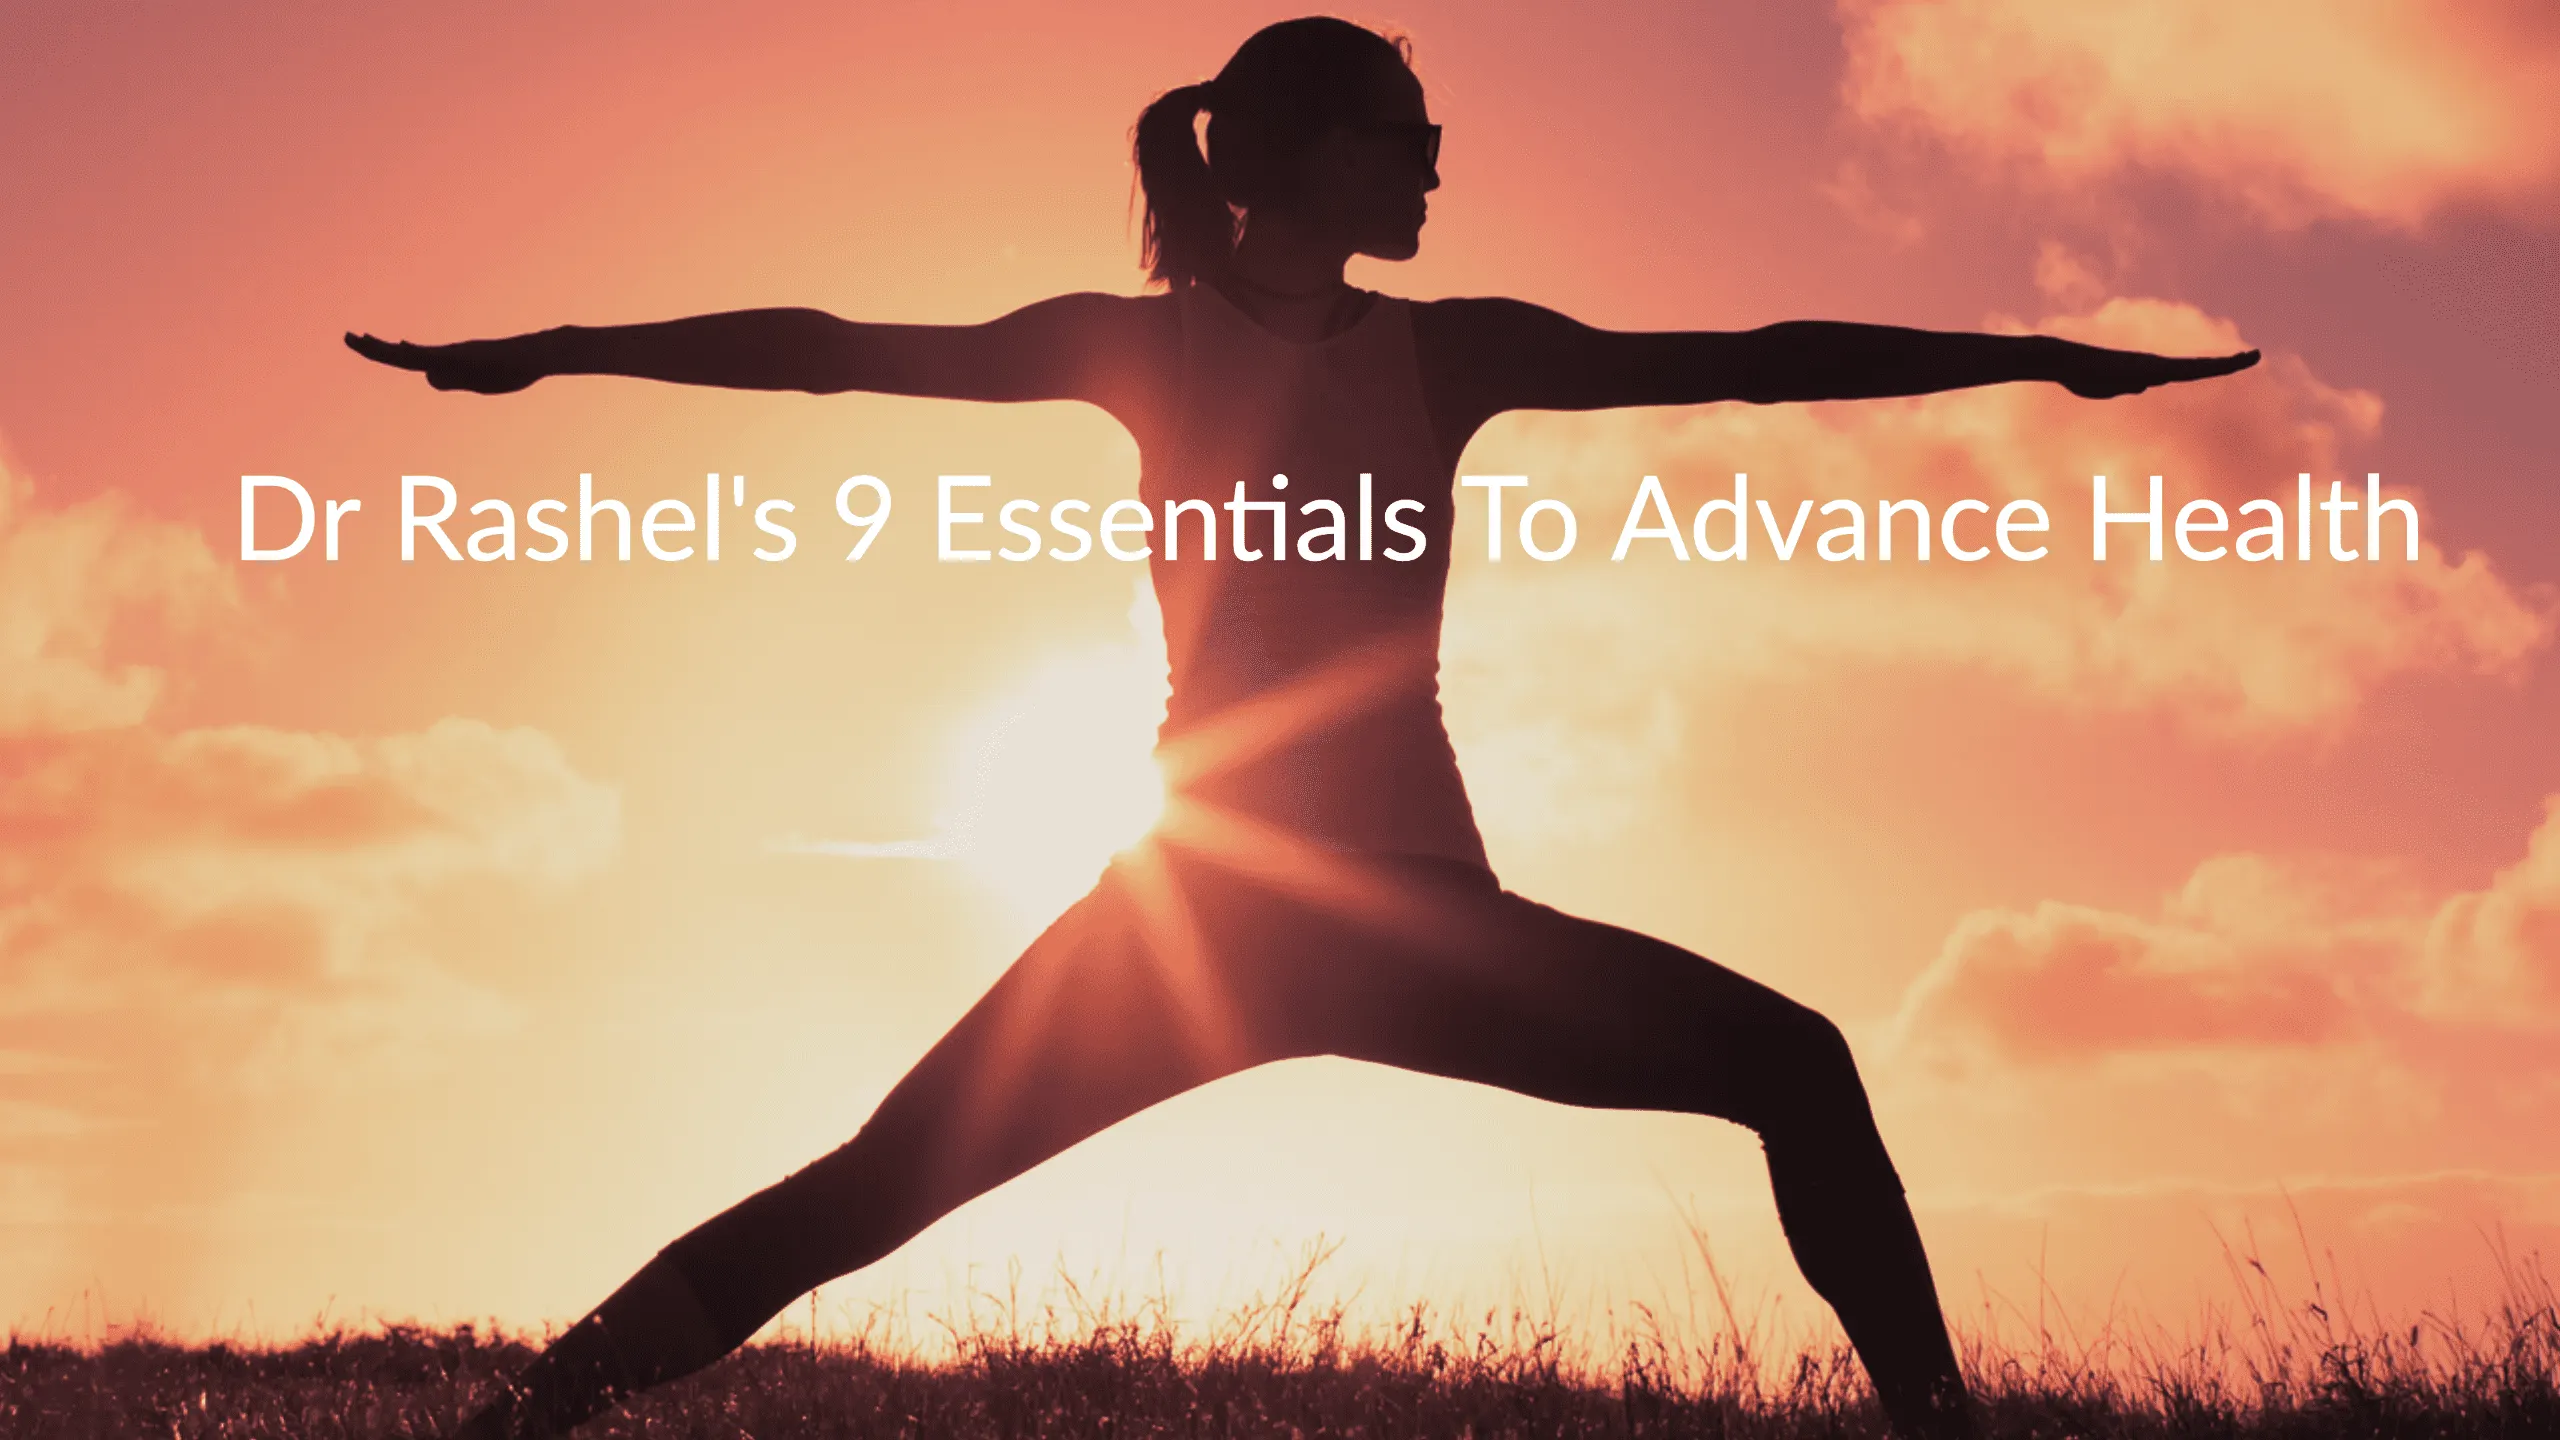 Dr rachel's 9 essentials to advance health.